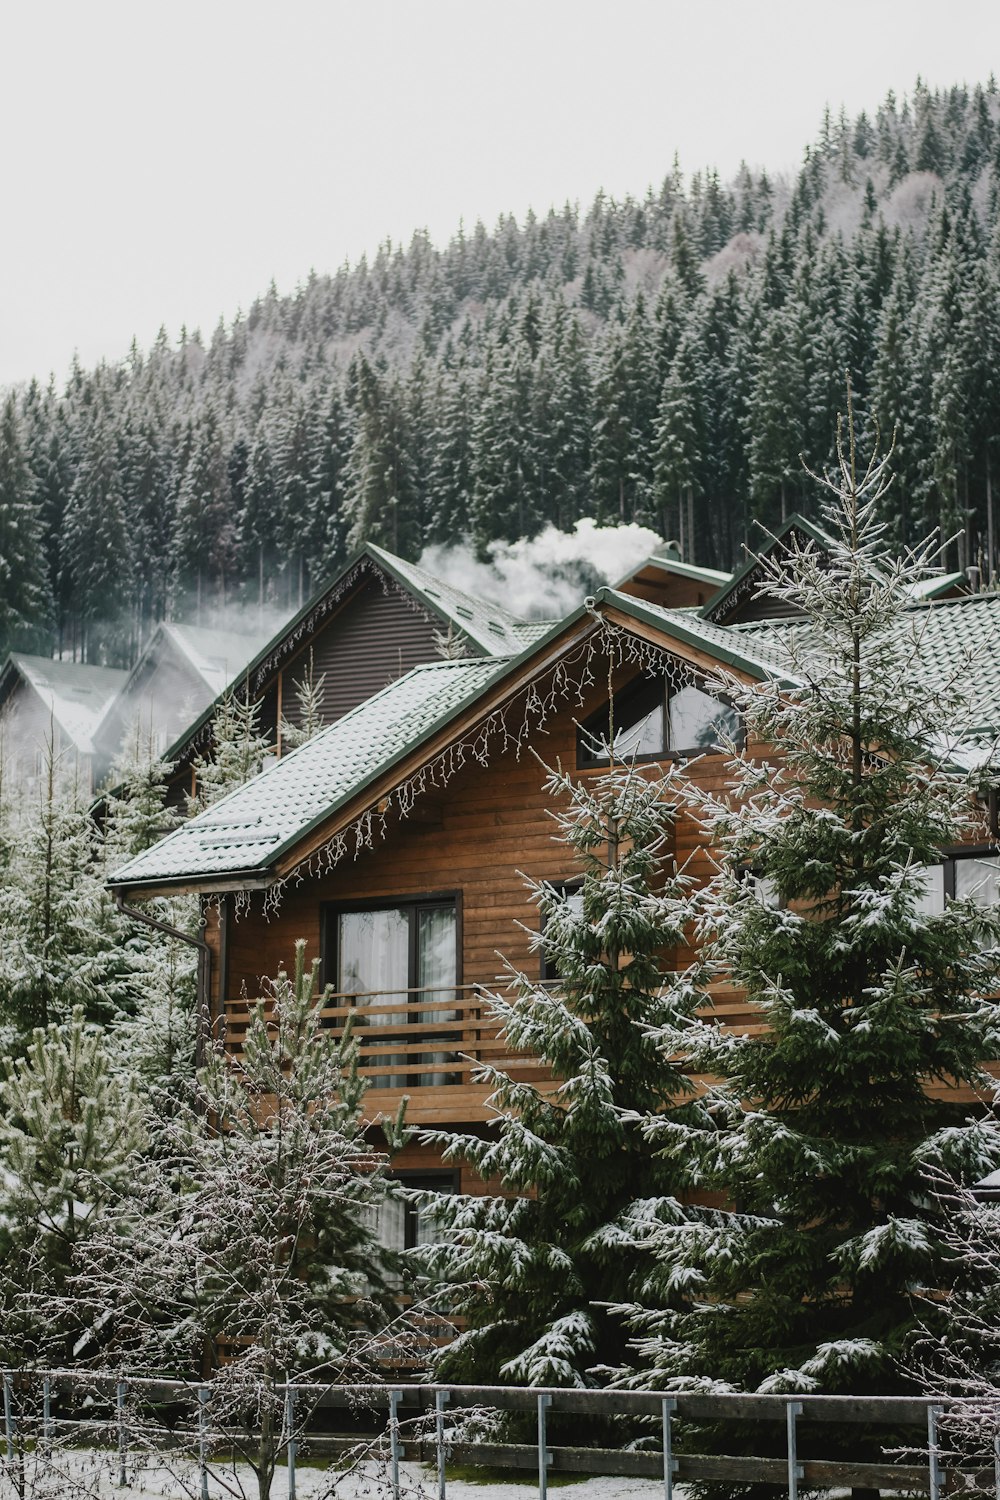 brown wooden cabin